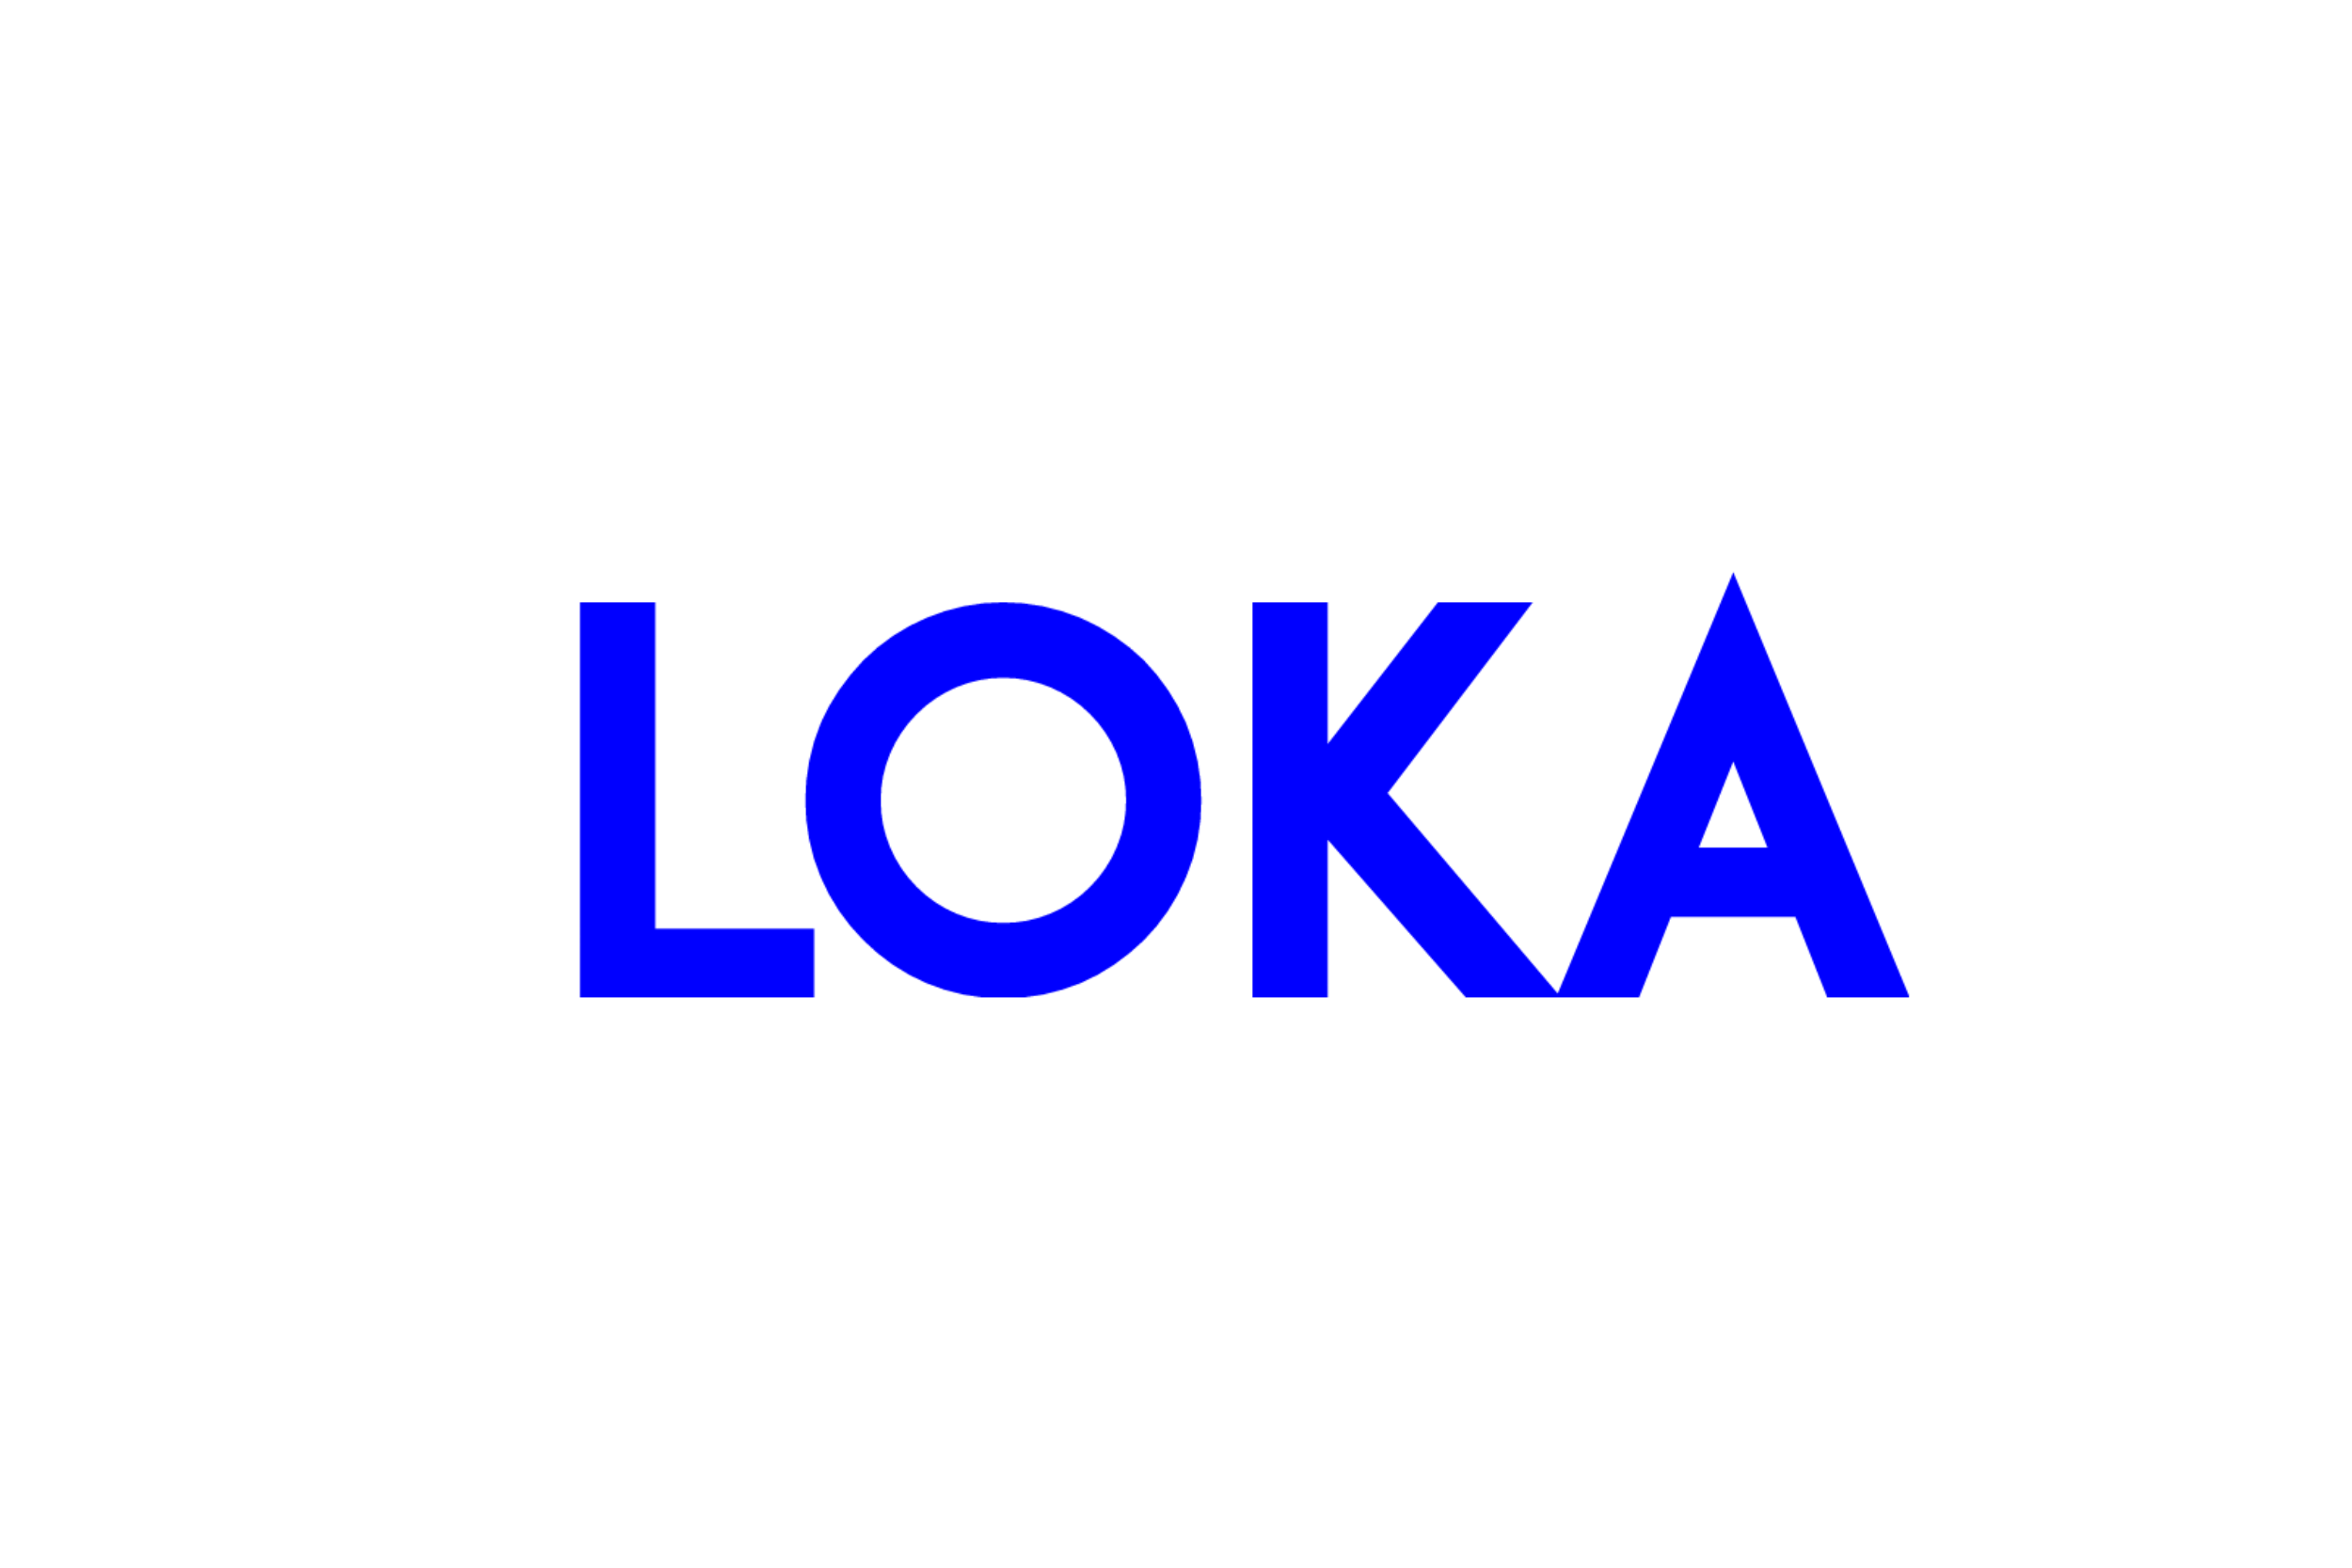 Loka International